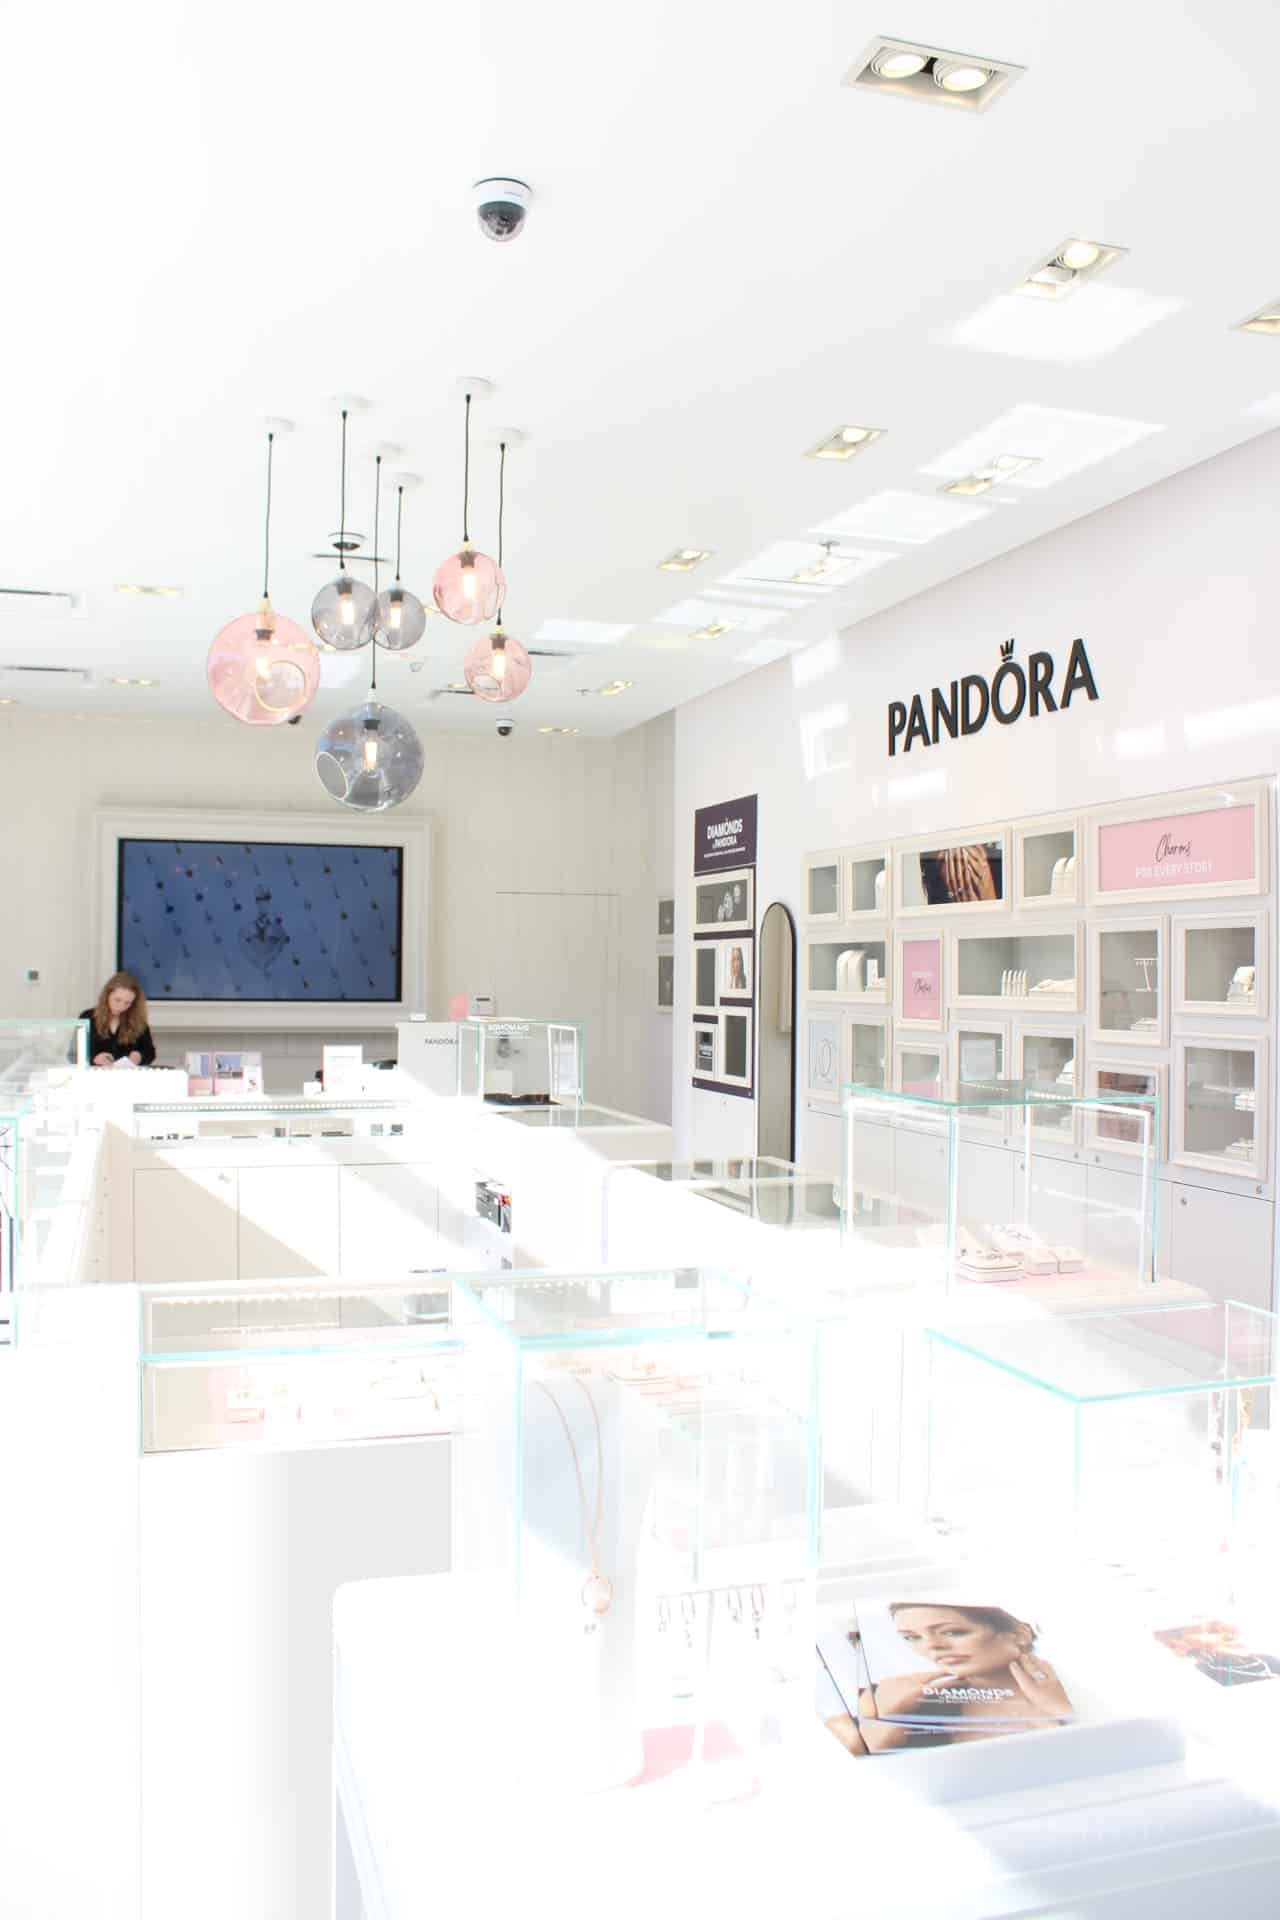 Your Pandora deserves the - Pandora Store at Summit Mall